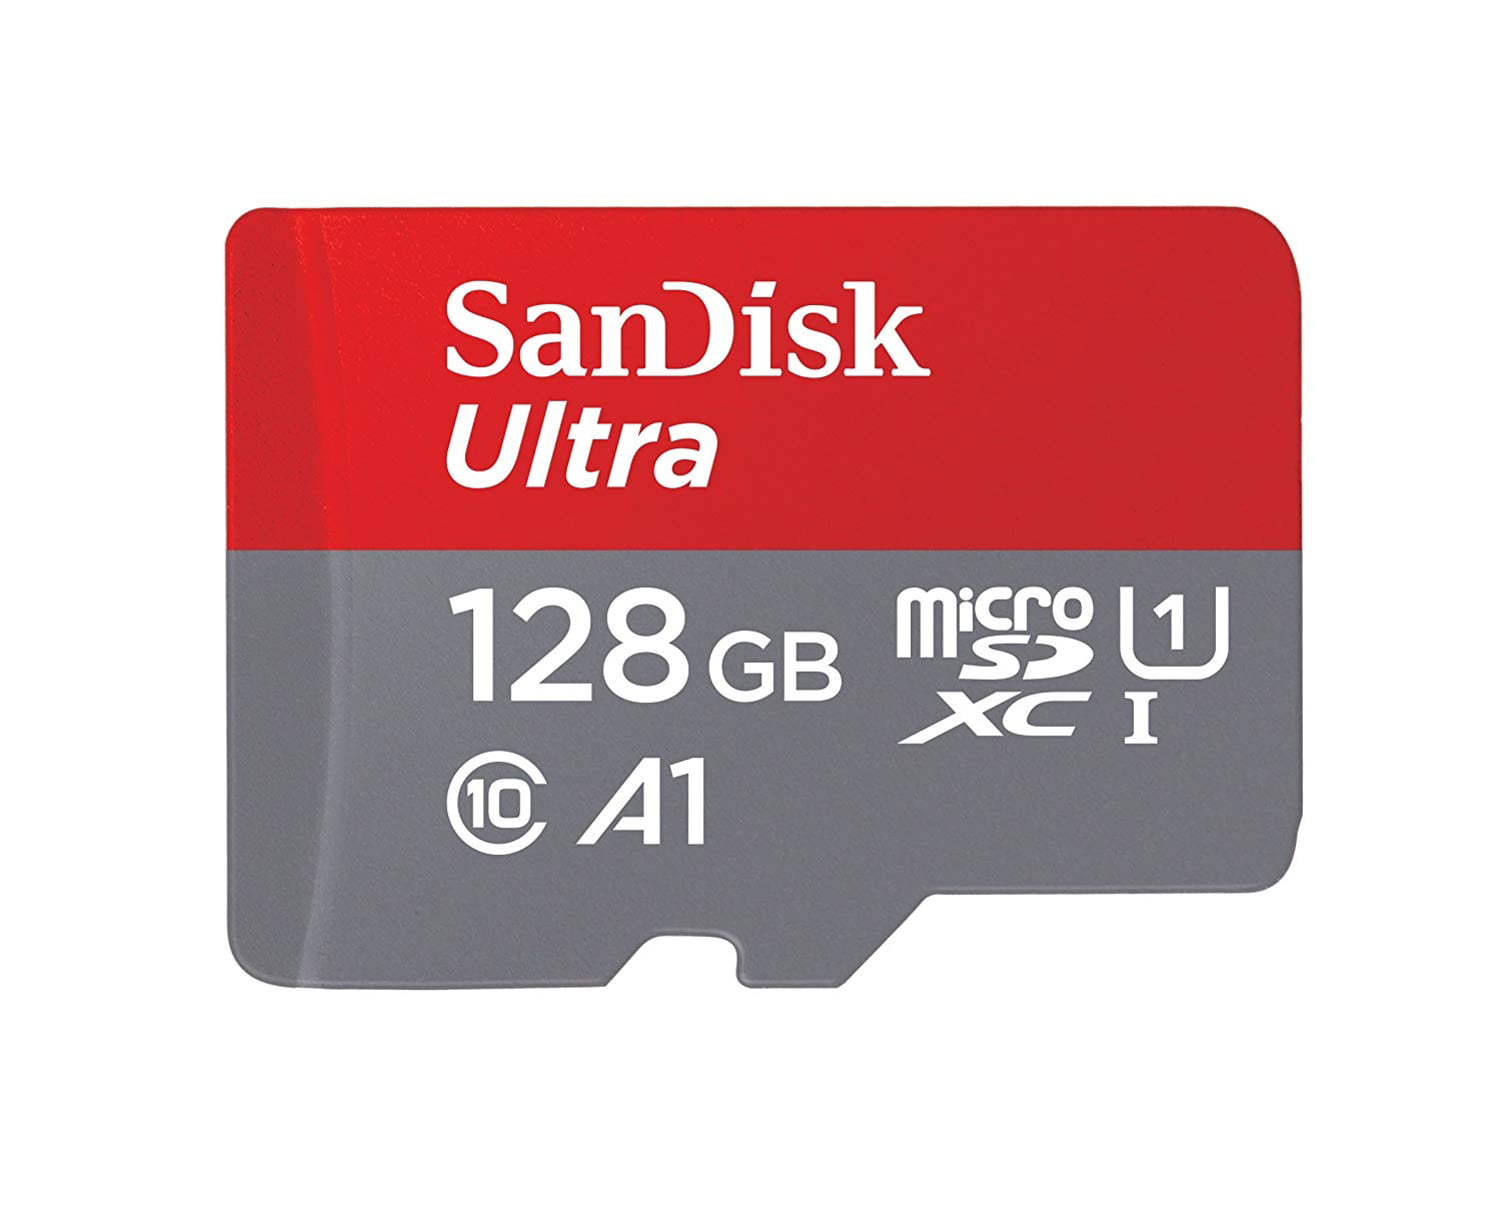 fremtid entanglement døråbning Sandisk Ultra 128GB Memory Card for Galaxy J7/J5/J3 - High Speed MicroSD  Class 10 MicroSDXC W9R Compatible With Samsung Galaxy J7/J5/J3 - Walmart.com